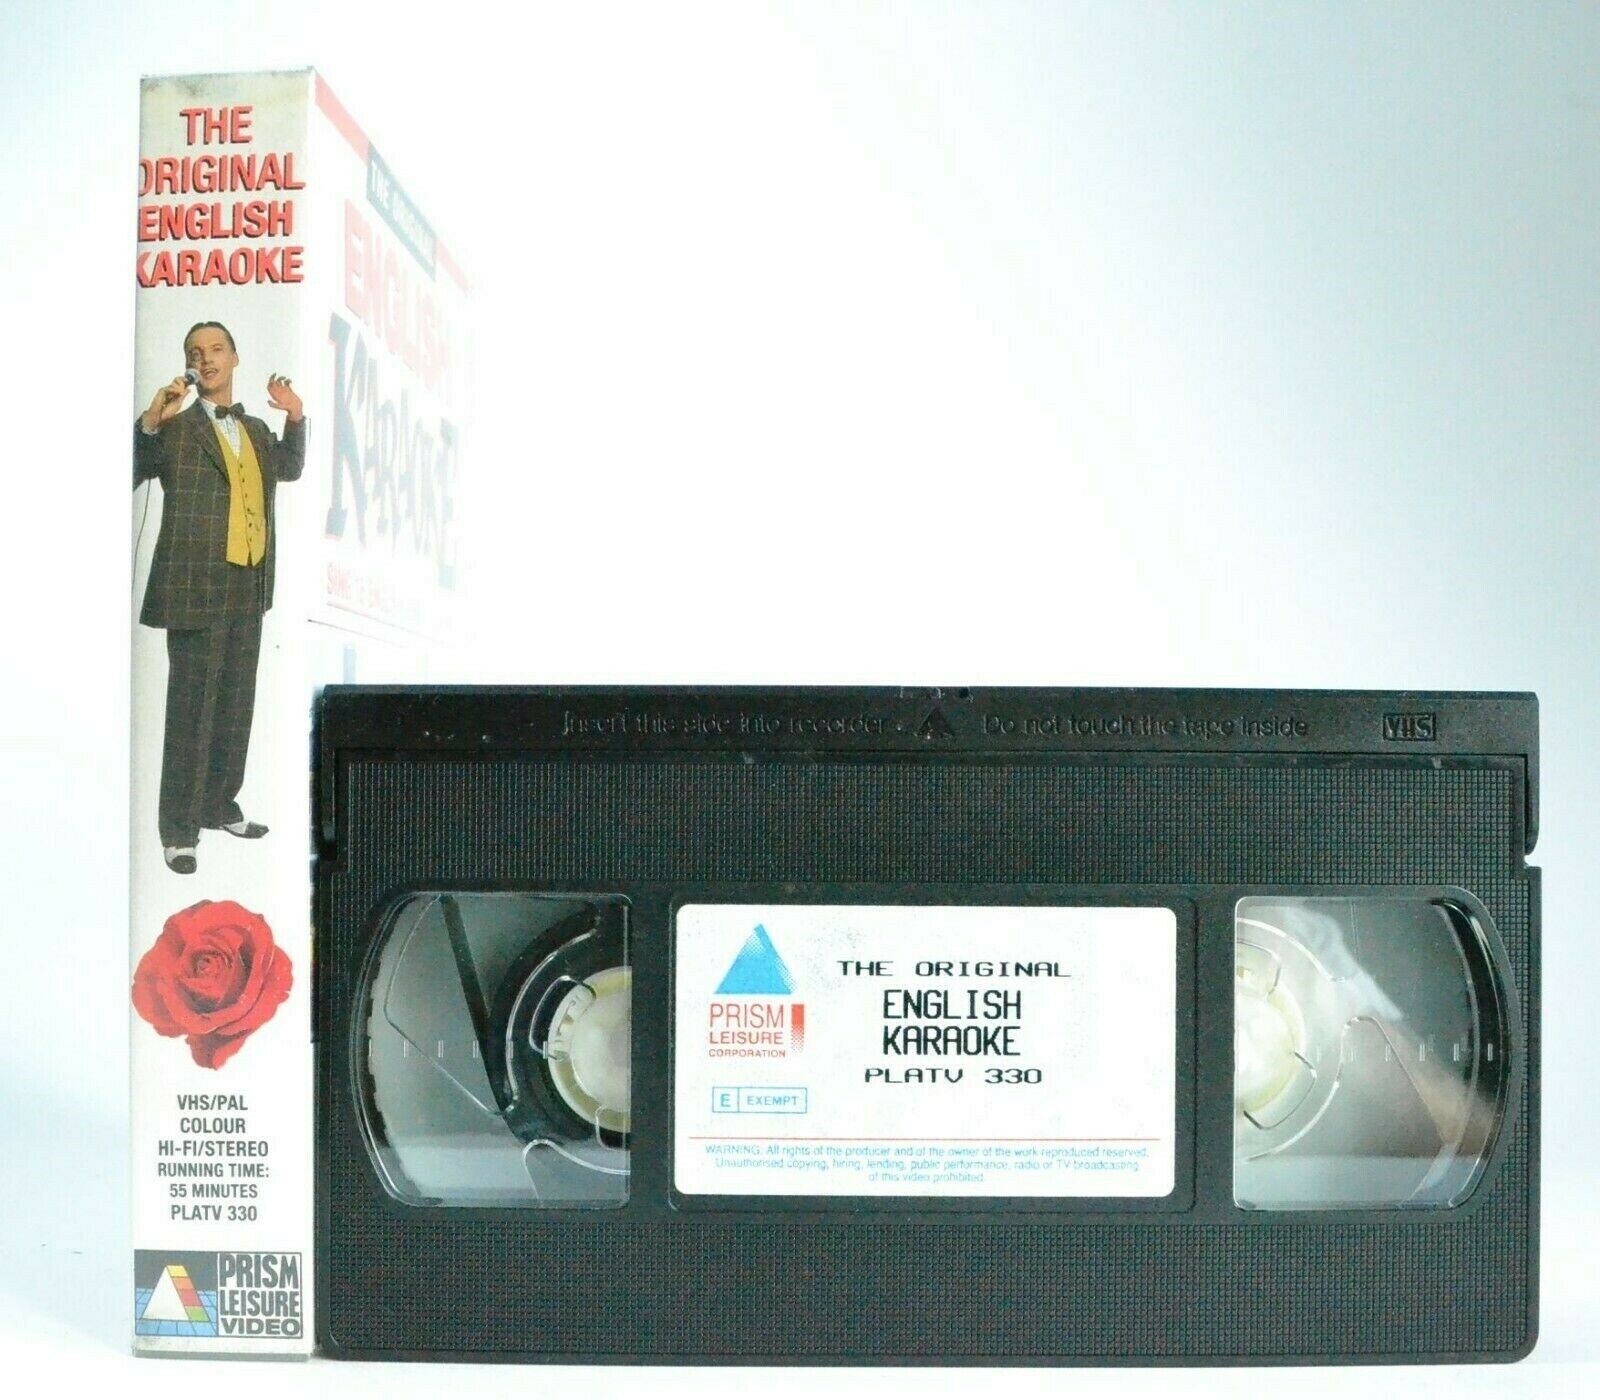 The Original English Karaoke - Home Entertainment - Classic Songs - Music - VHS-